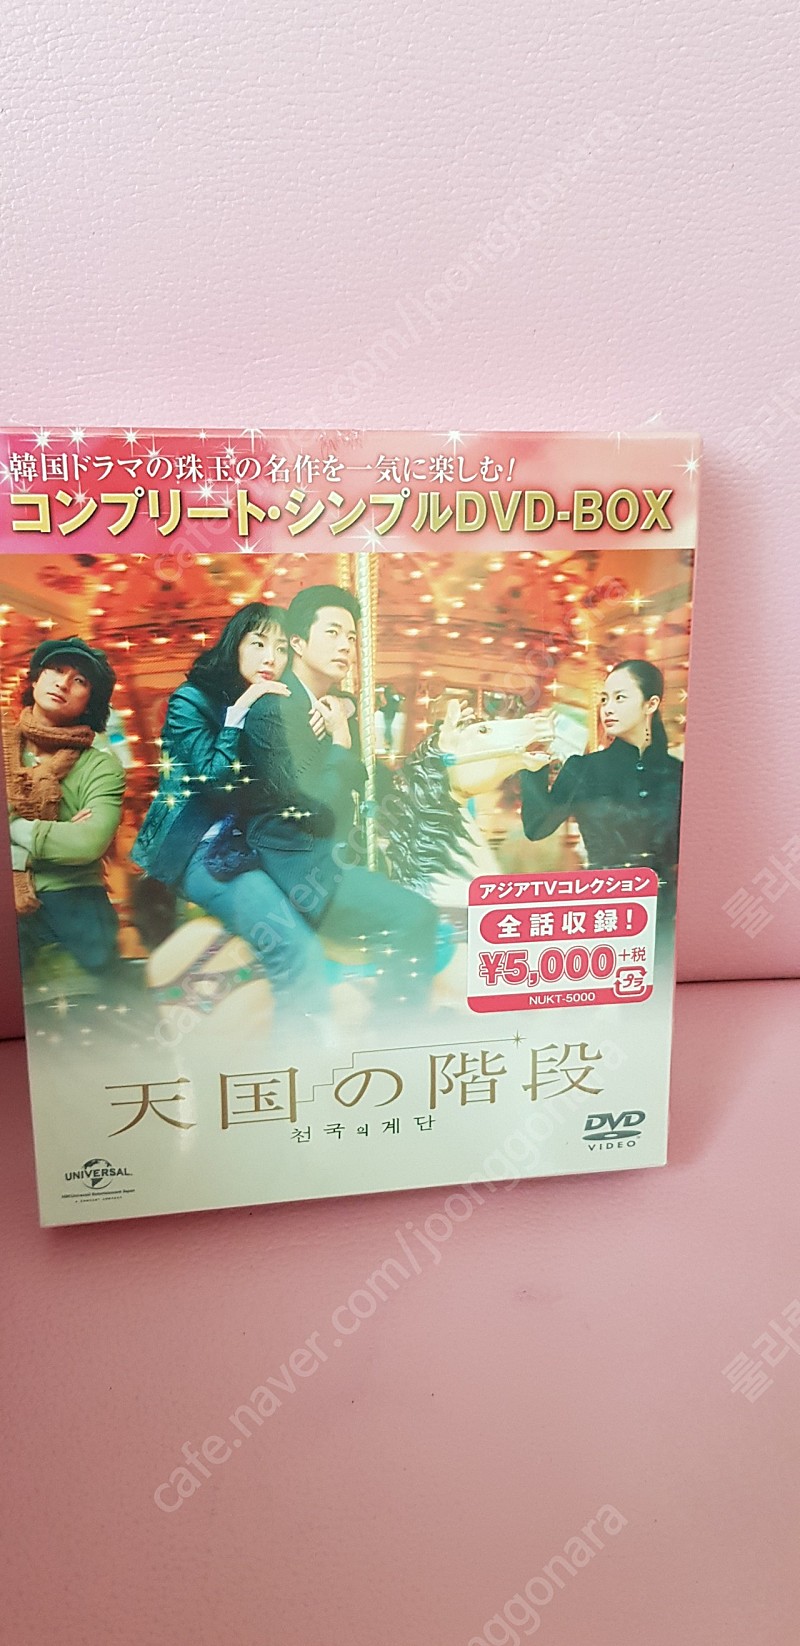 sbs드라마 천국의계단 일본판 DVD